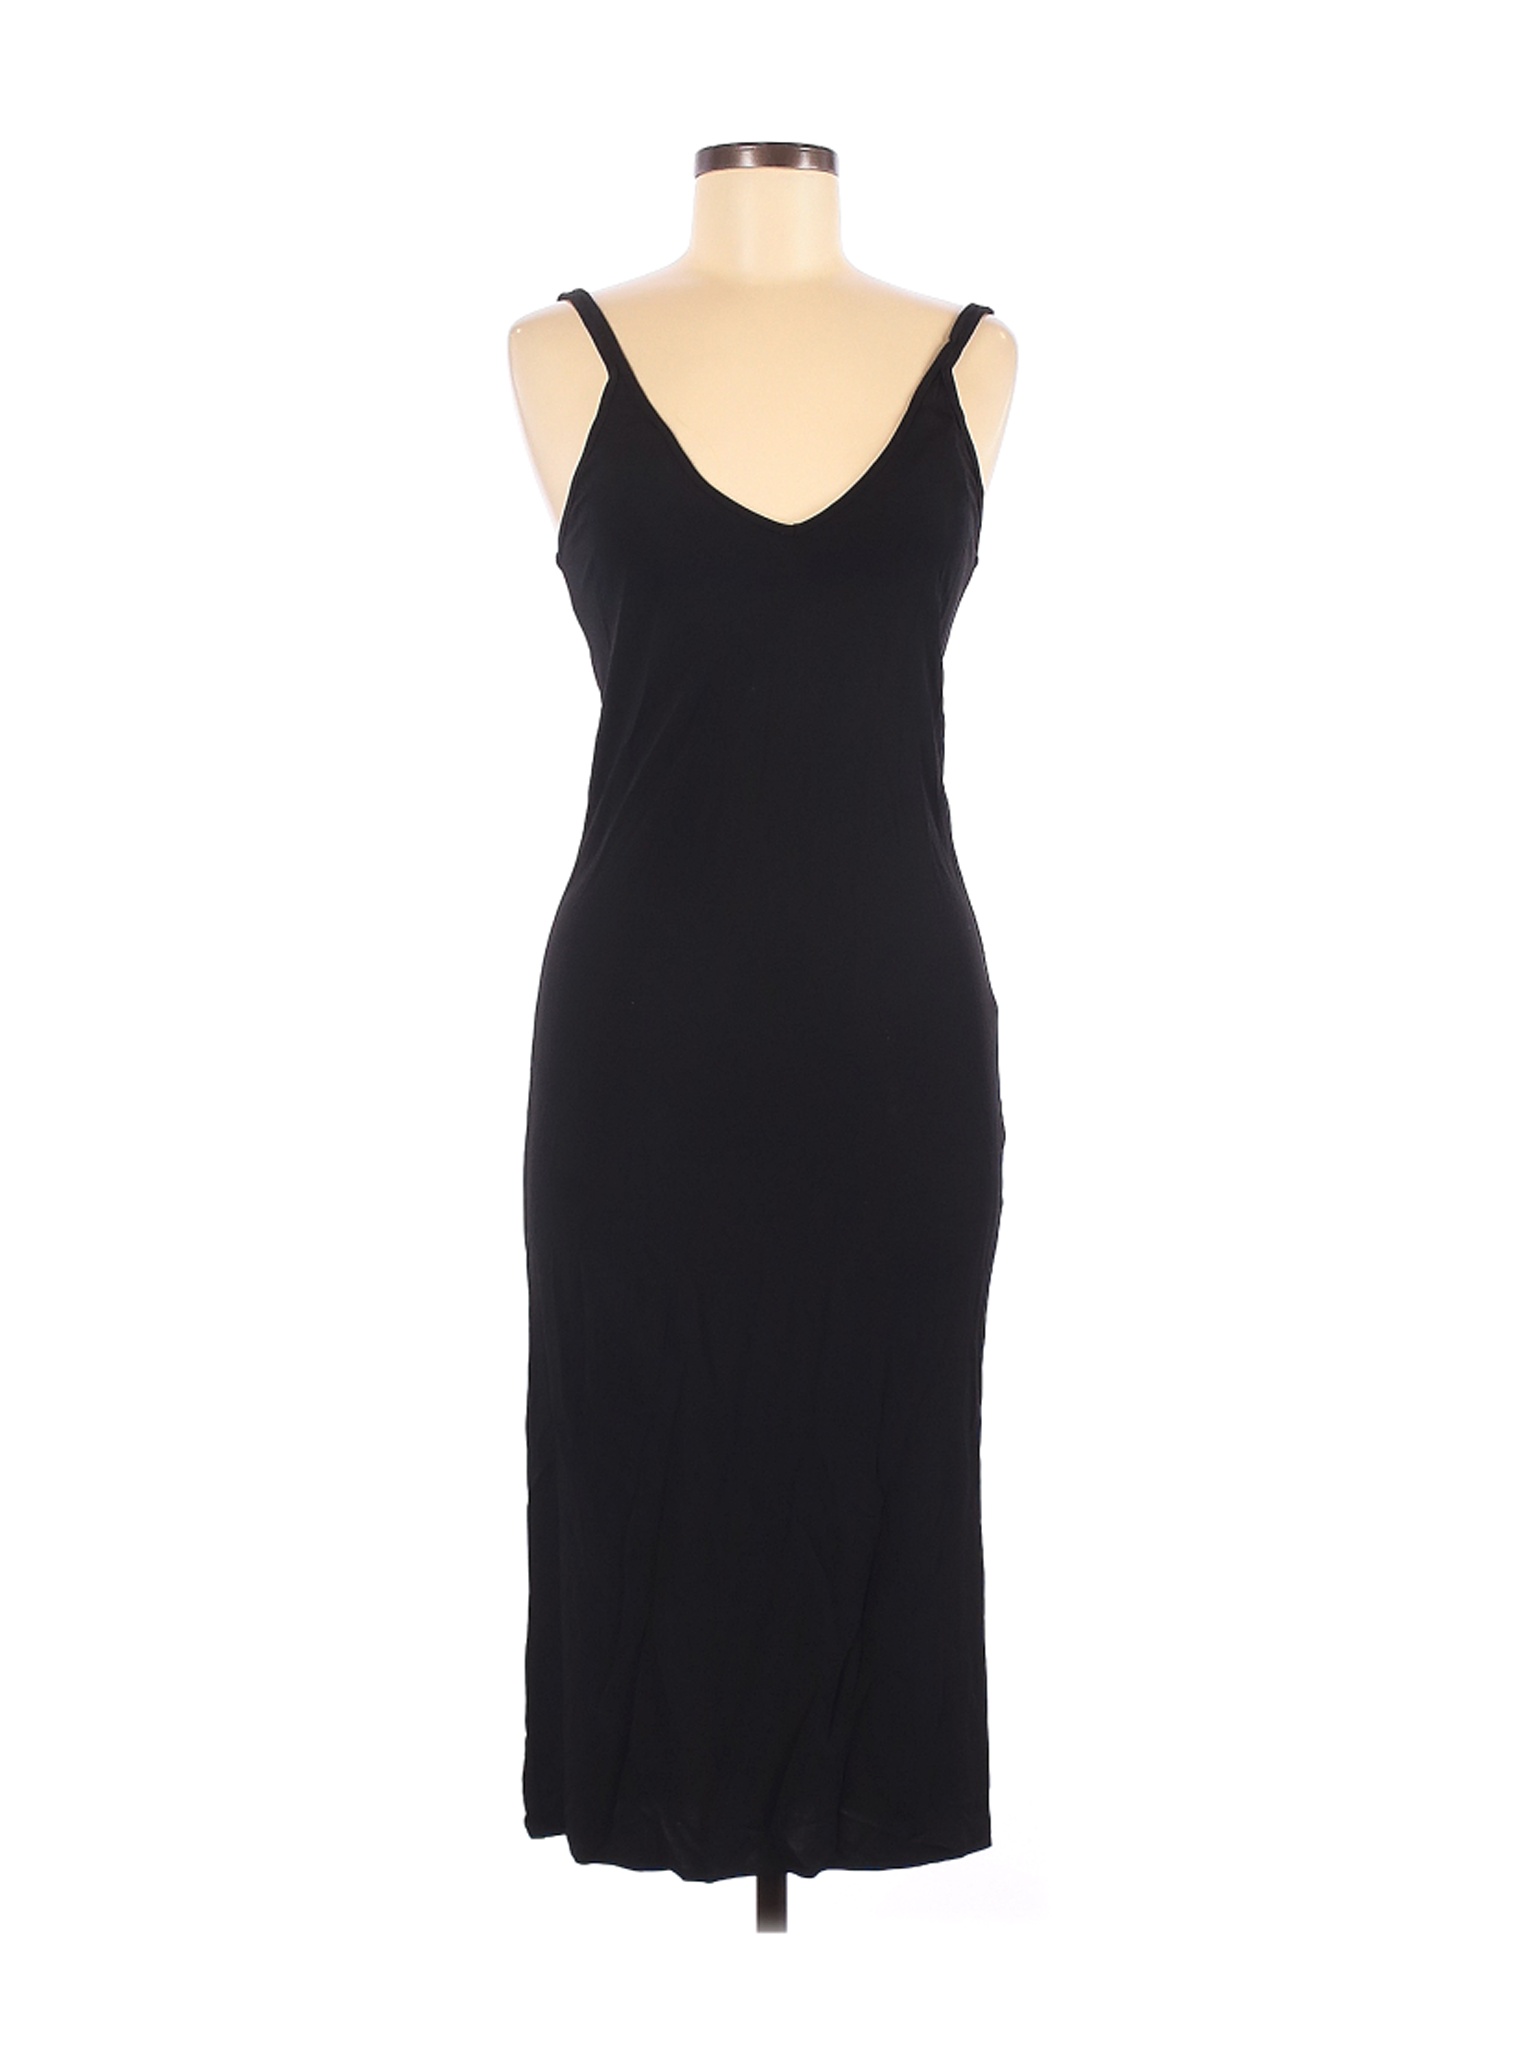 Wilfred Free Women Black Casual Dress M | eBay